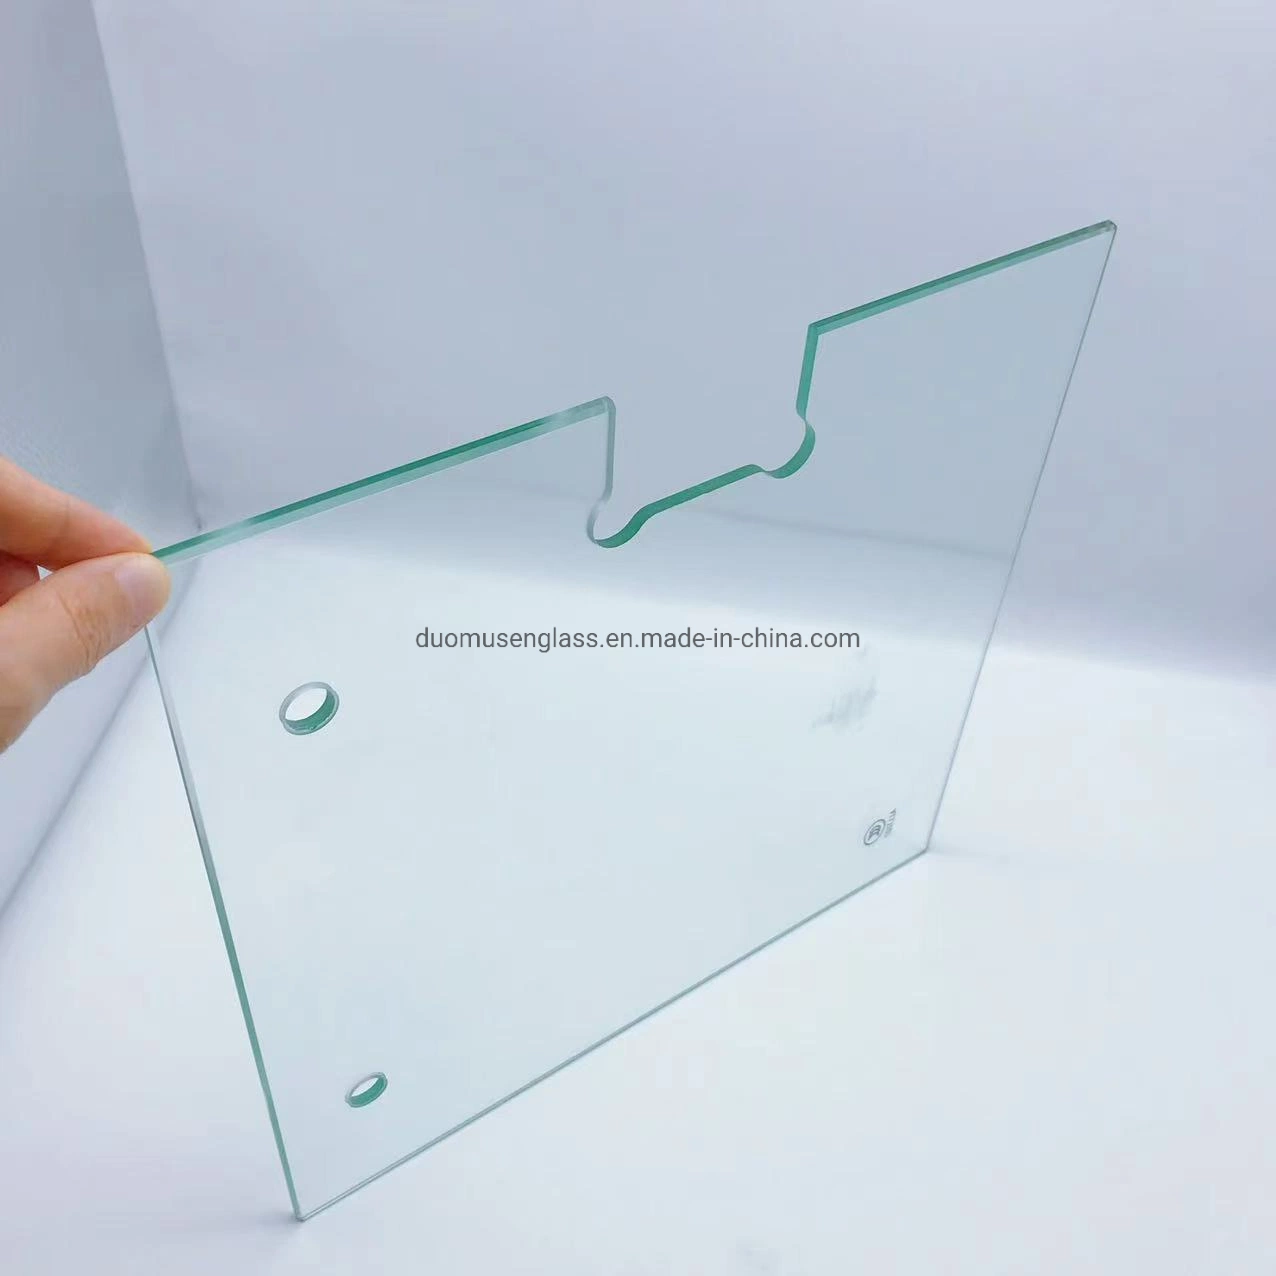 SGCC / Udem / CE / 3c Certification Factory Wholesale Pirce 4mm-12mm Screen Printing Clear Shower Enclosure Tempered Glass